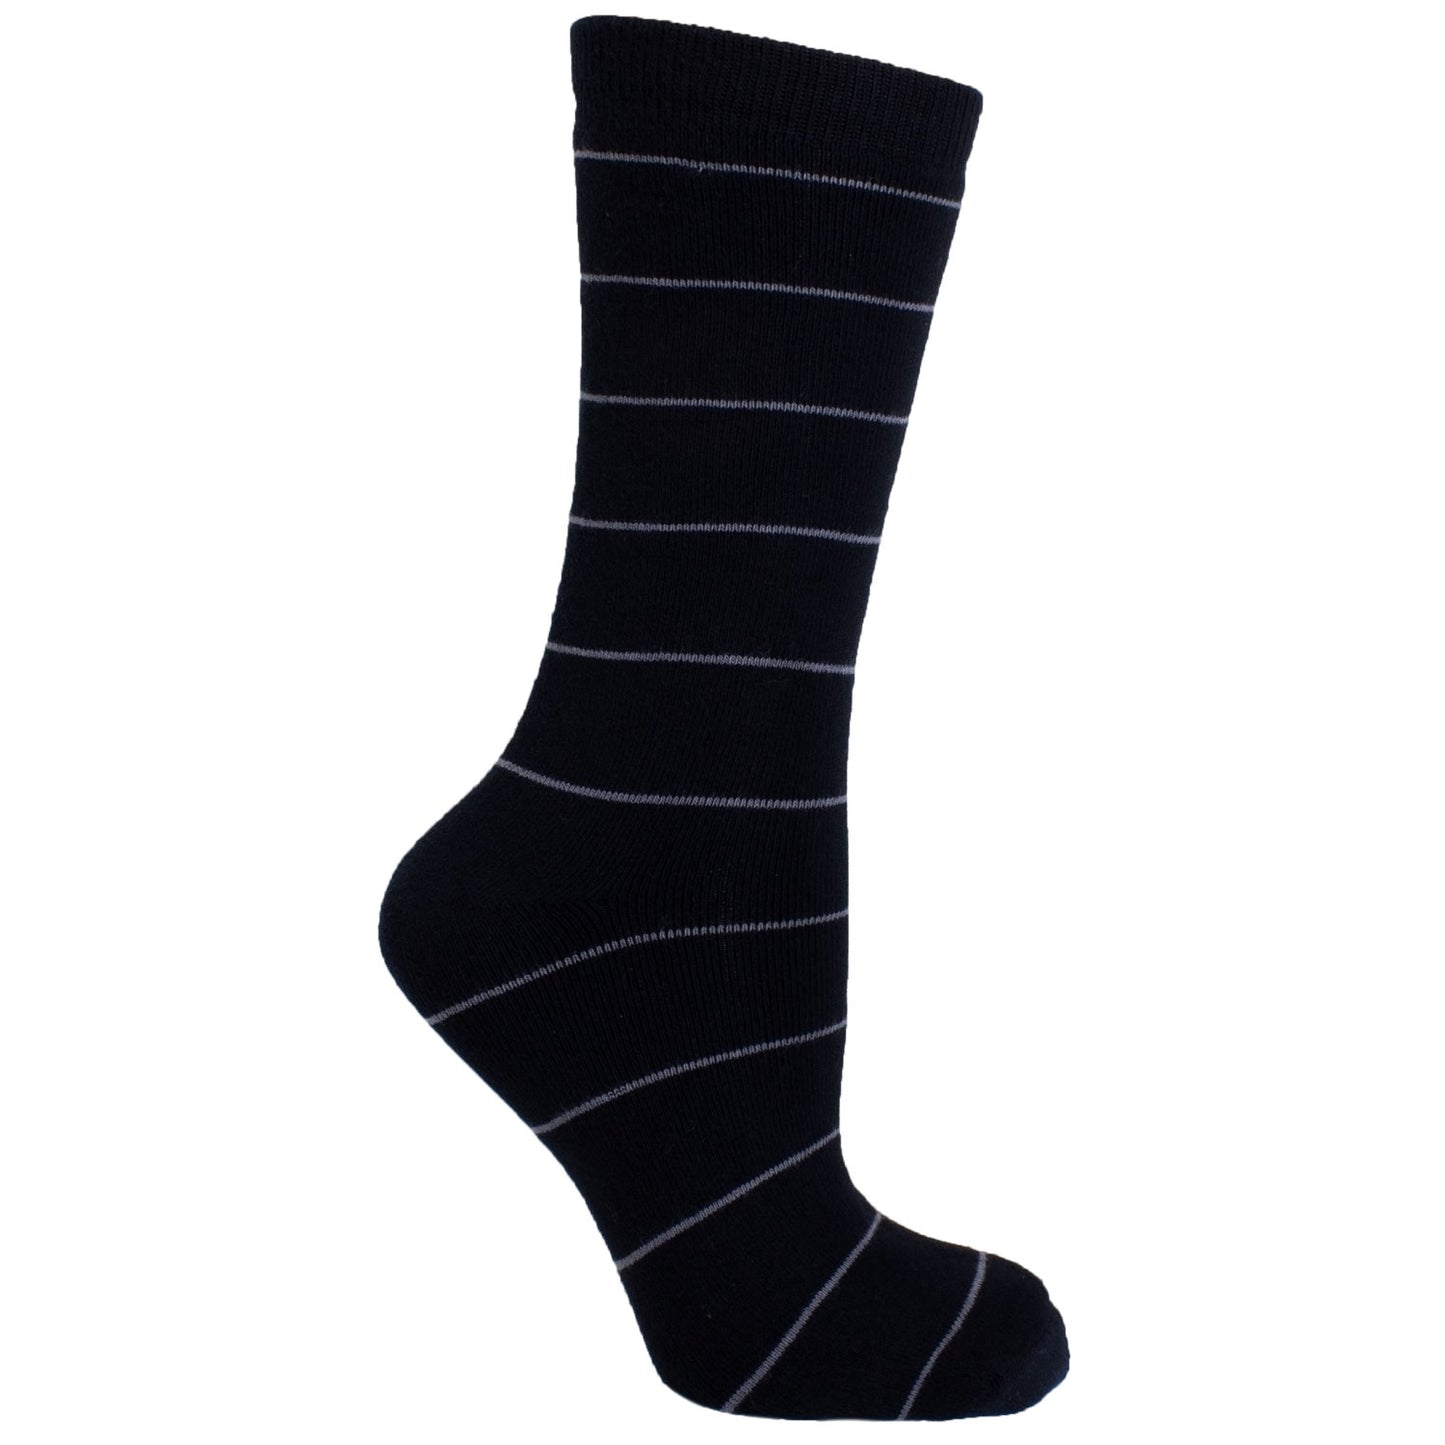 Men's Socks Striped Athletic Sport Comfortable Performance Mid Calf Crew Socks Black